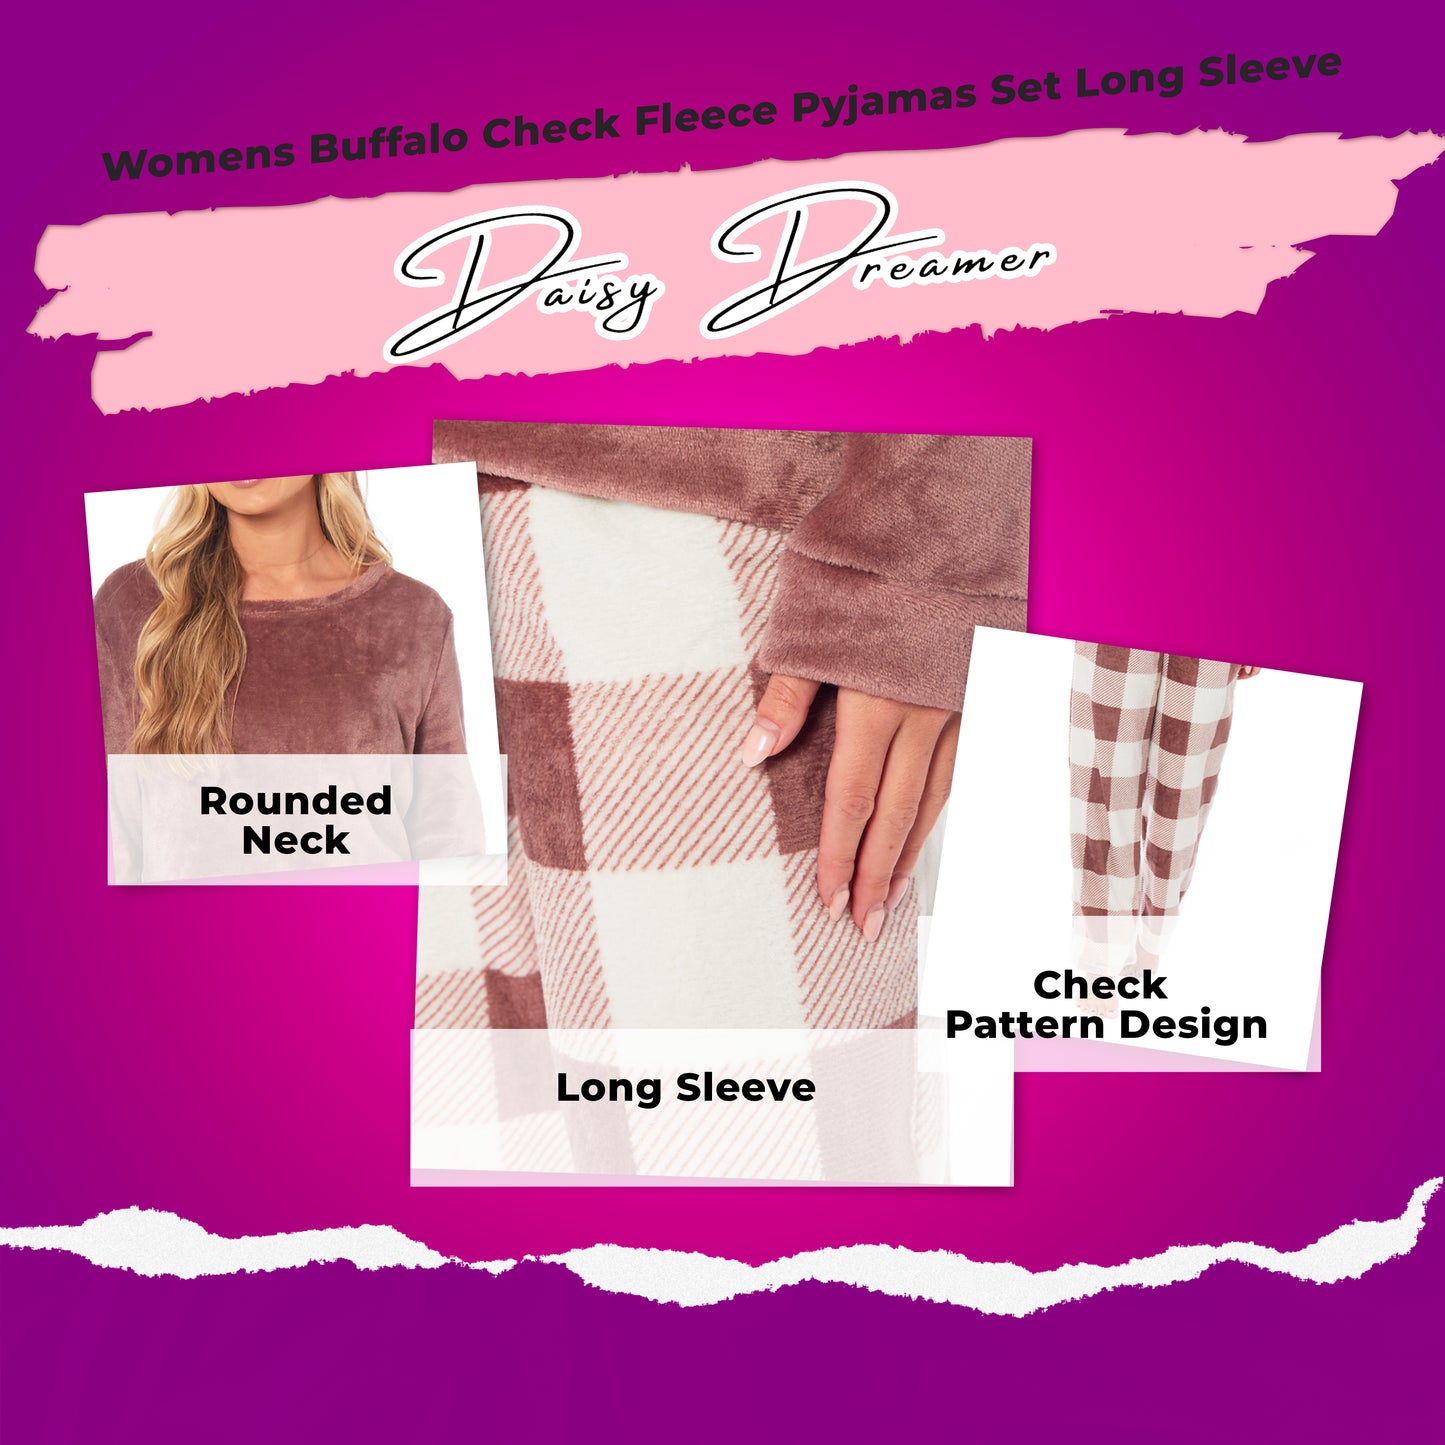 Women's Buffalo Check Fleece Pyjamas Set Long Sleeve Top & Pajama Bottoms Loungewear